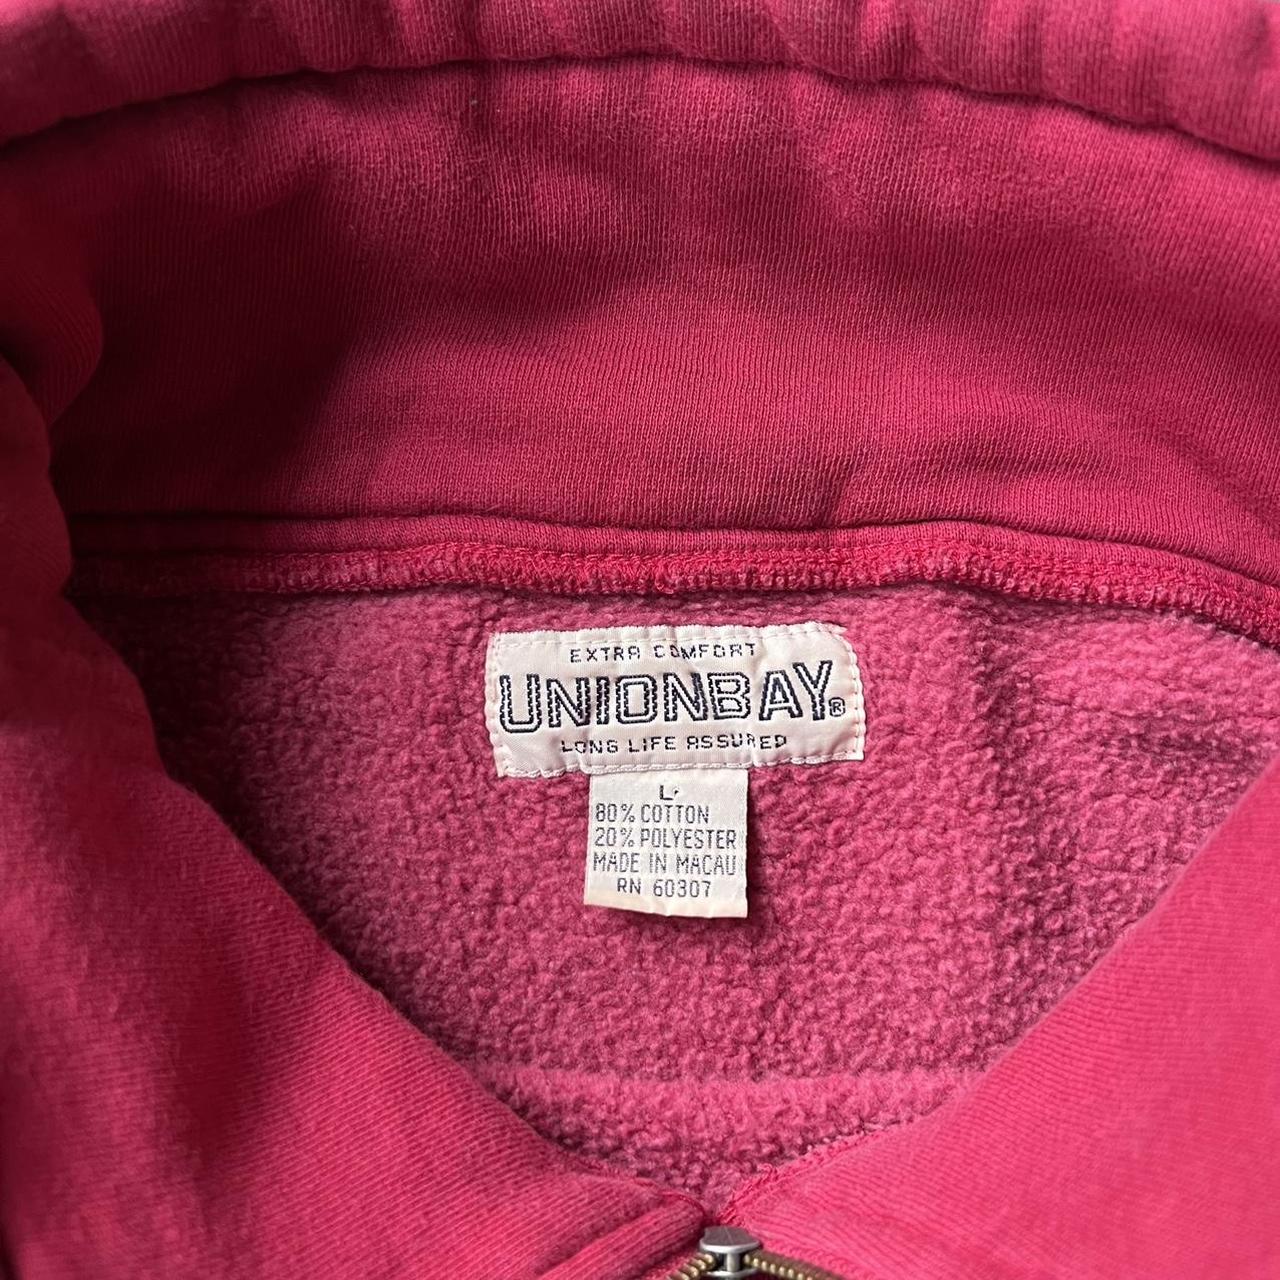 Union Bay Men's Red Sweatshirt (4)